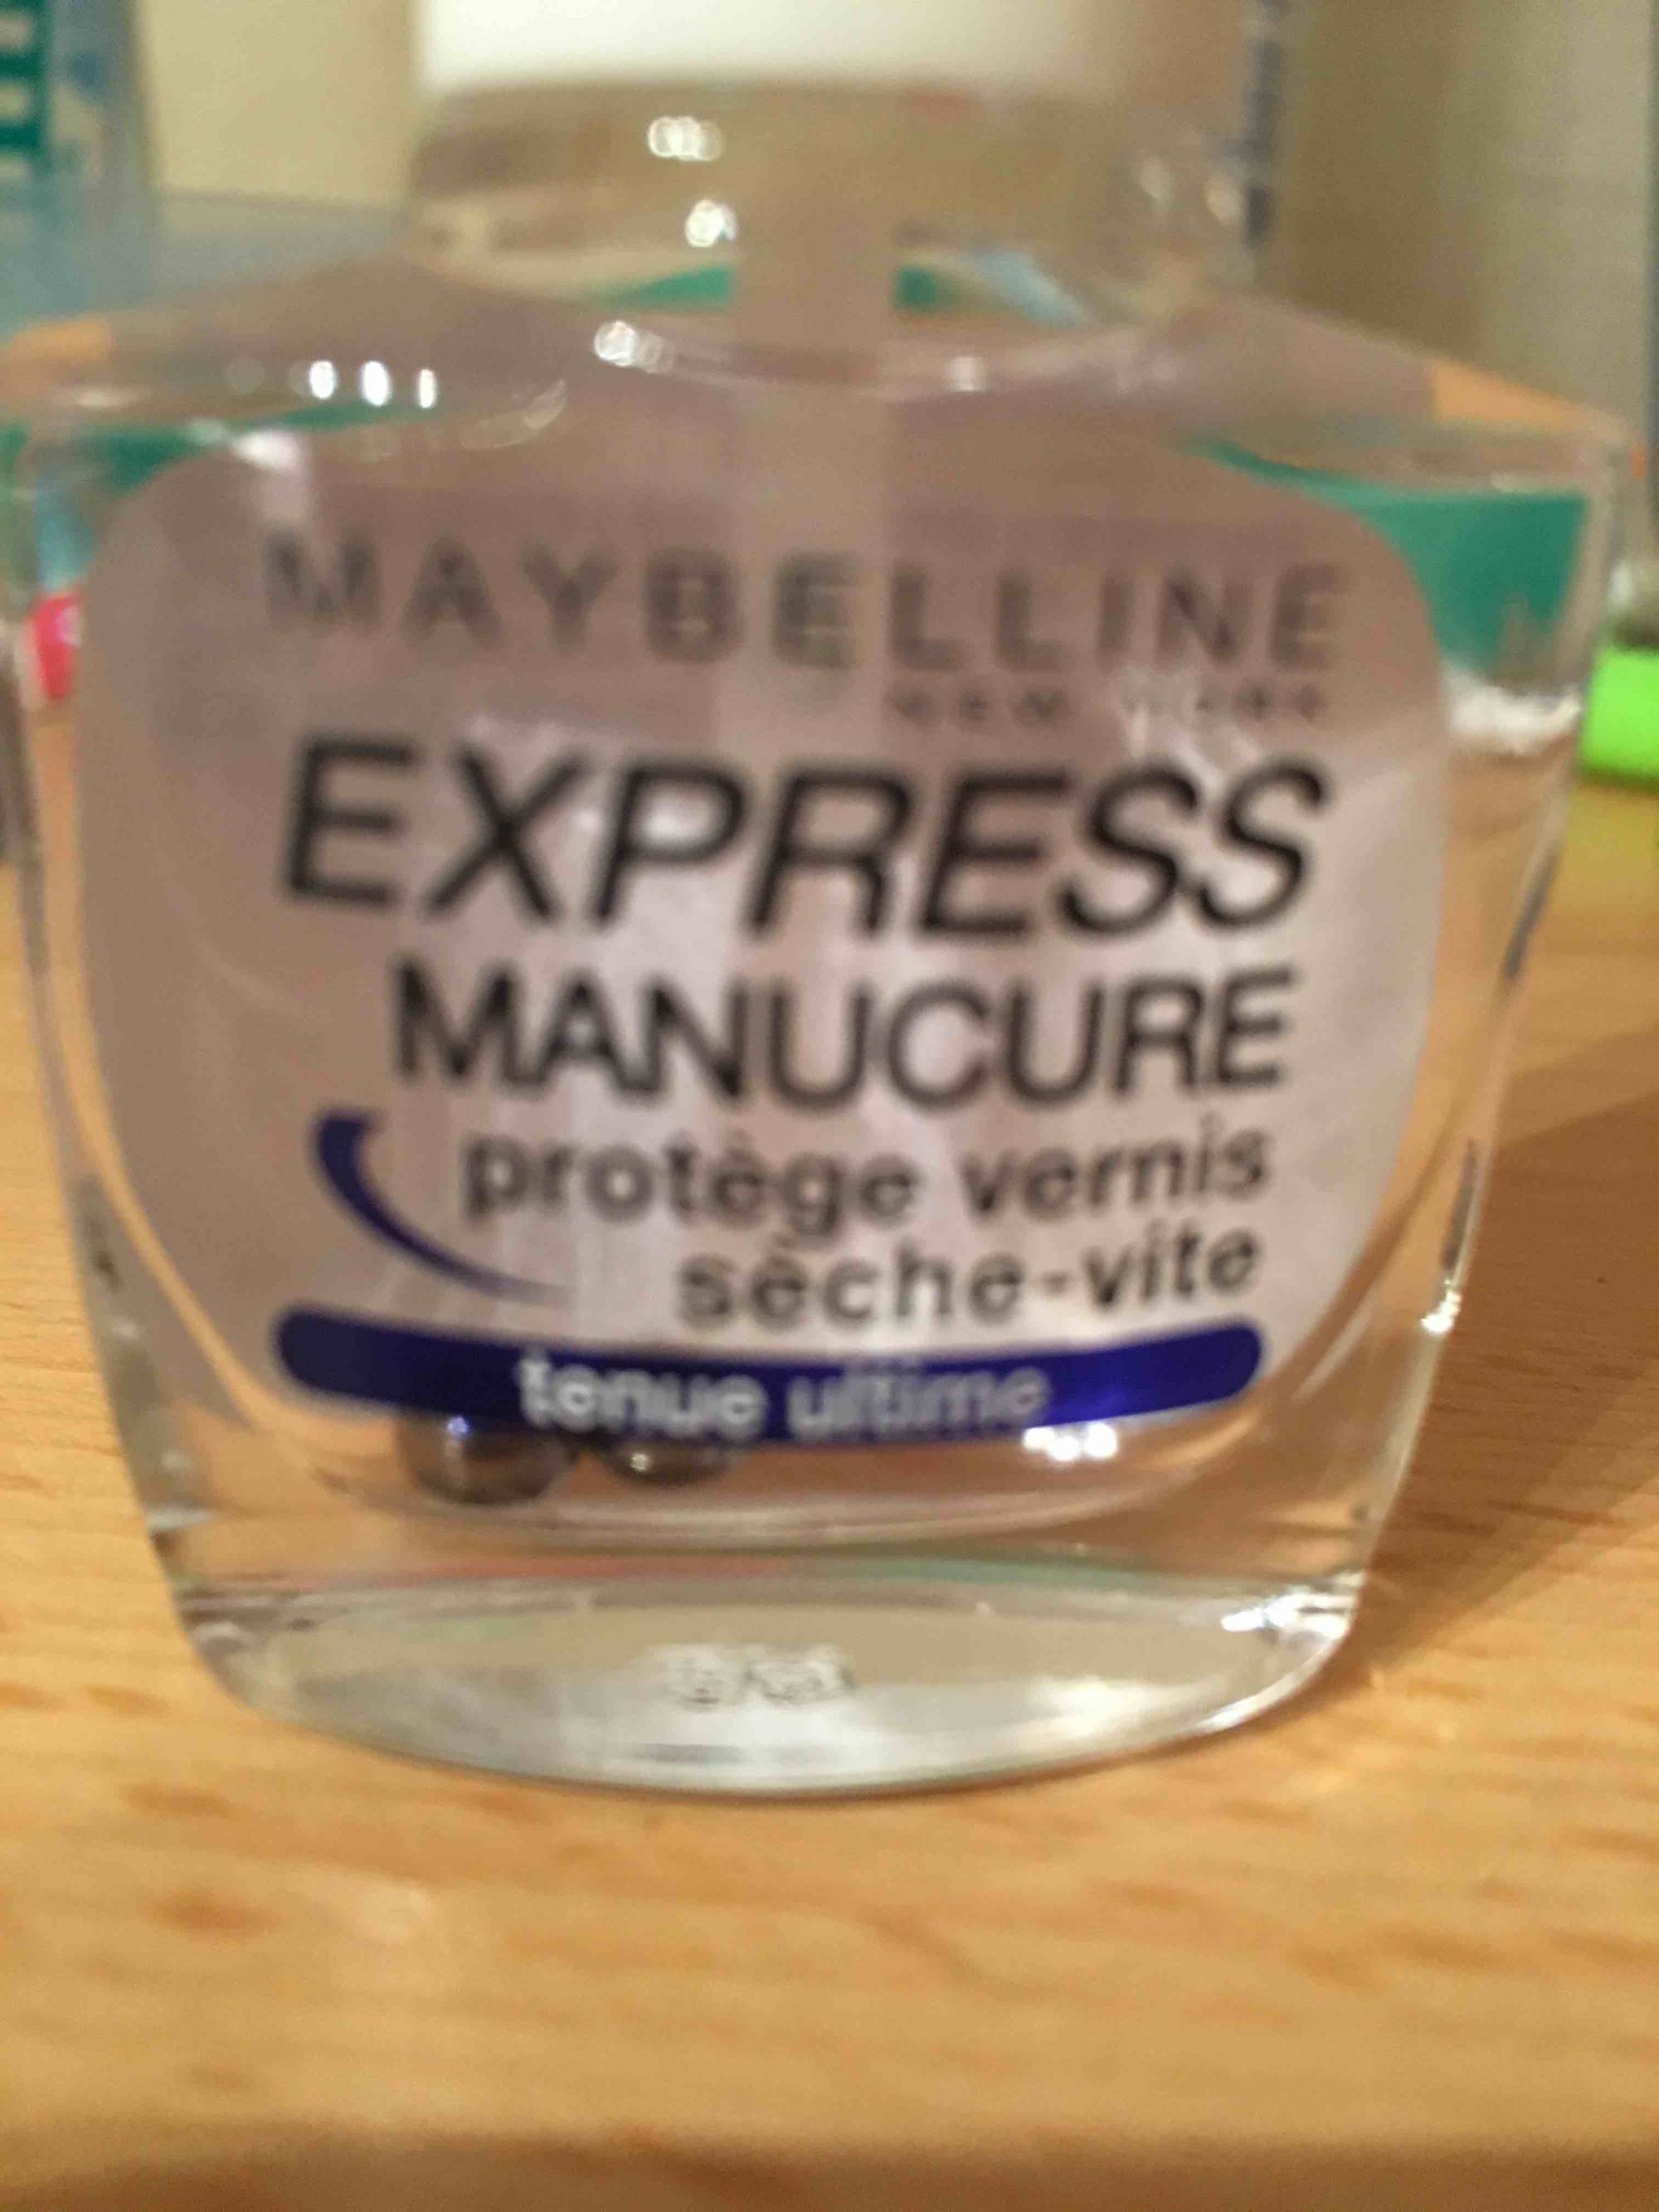 GEMEY MAYBELLINE - Express manucure - Protège vernis sèche-vite